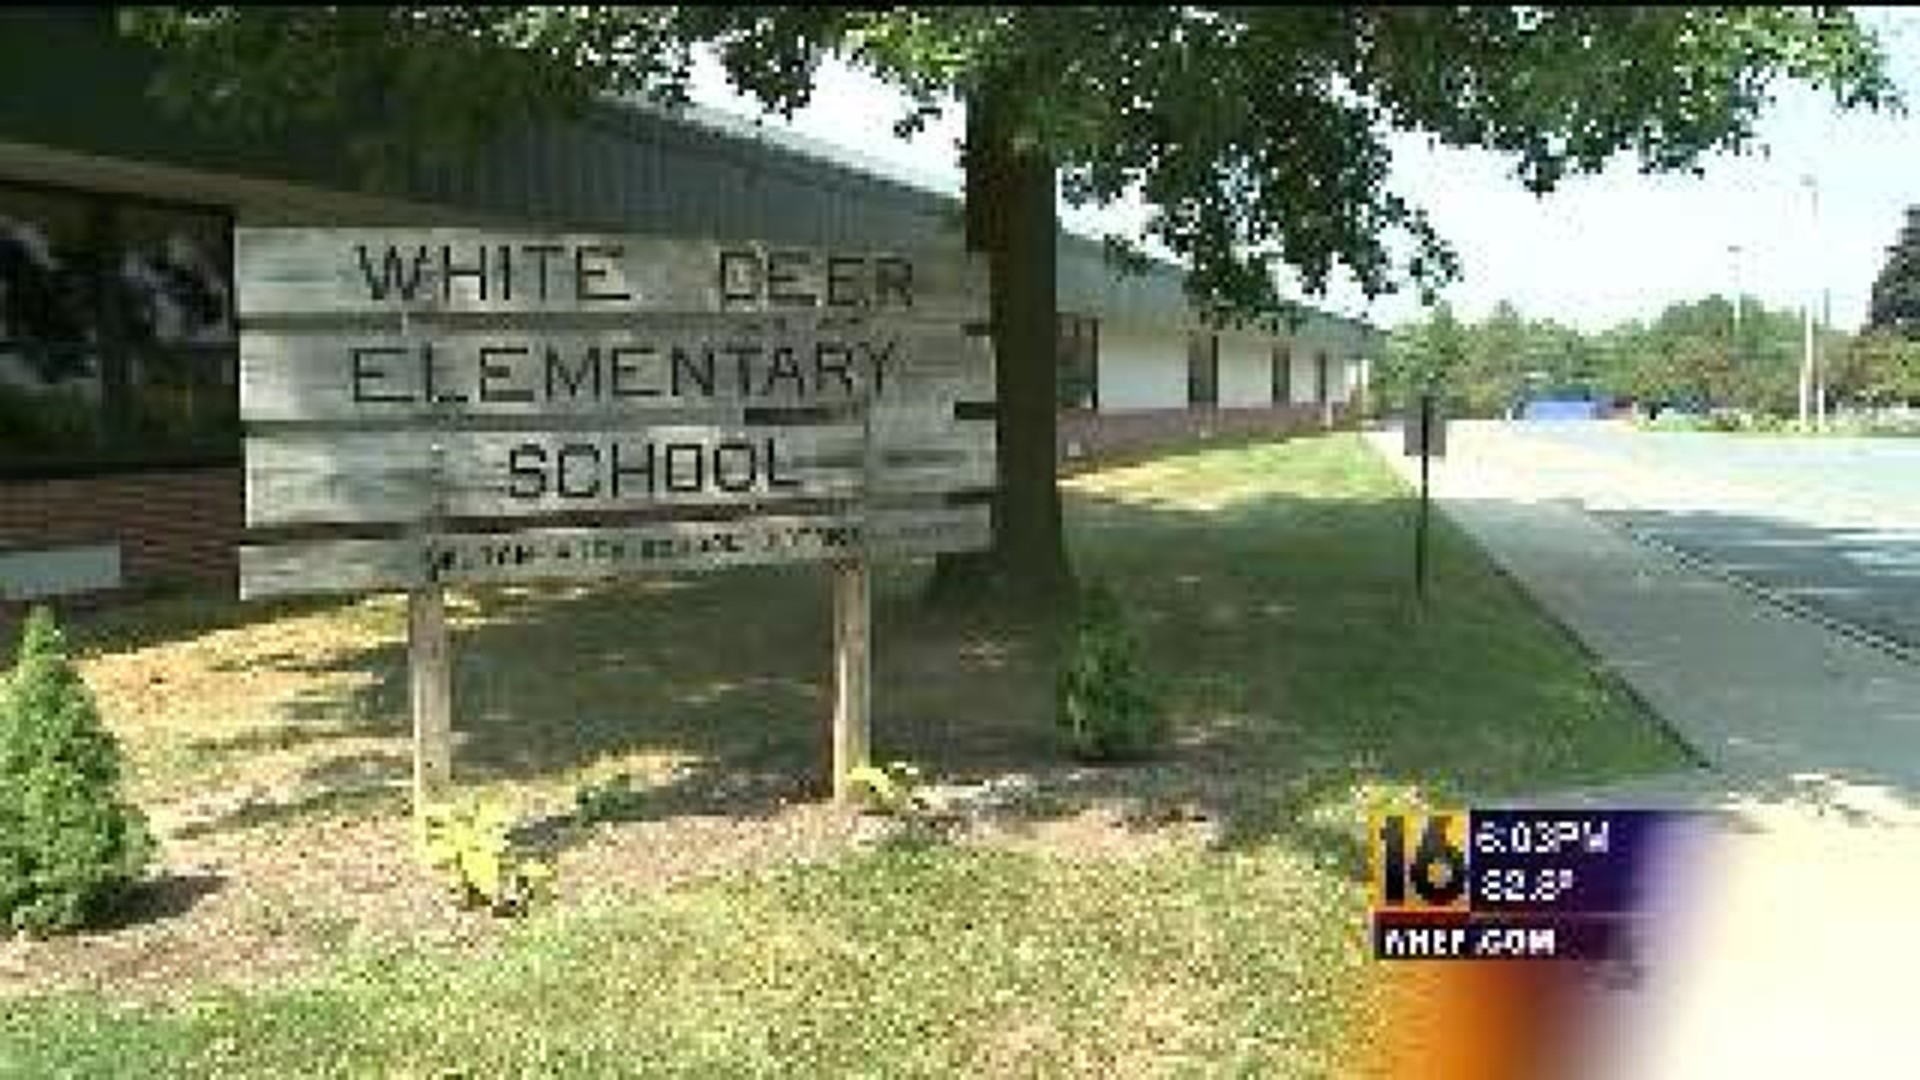 Despite Vandalism, Elementary School Will Start on Time